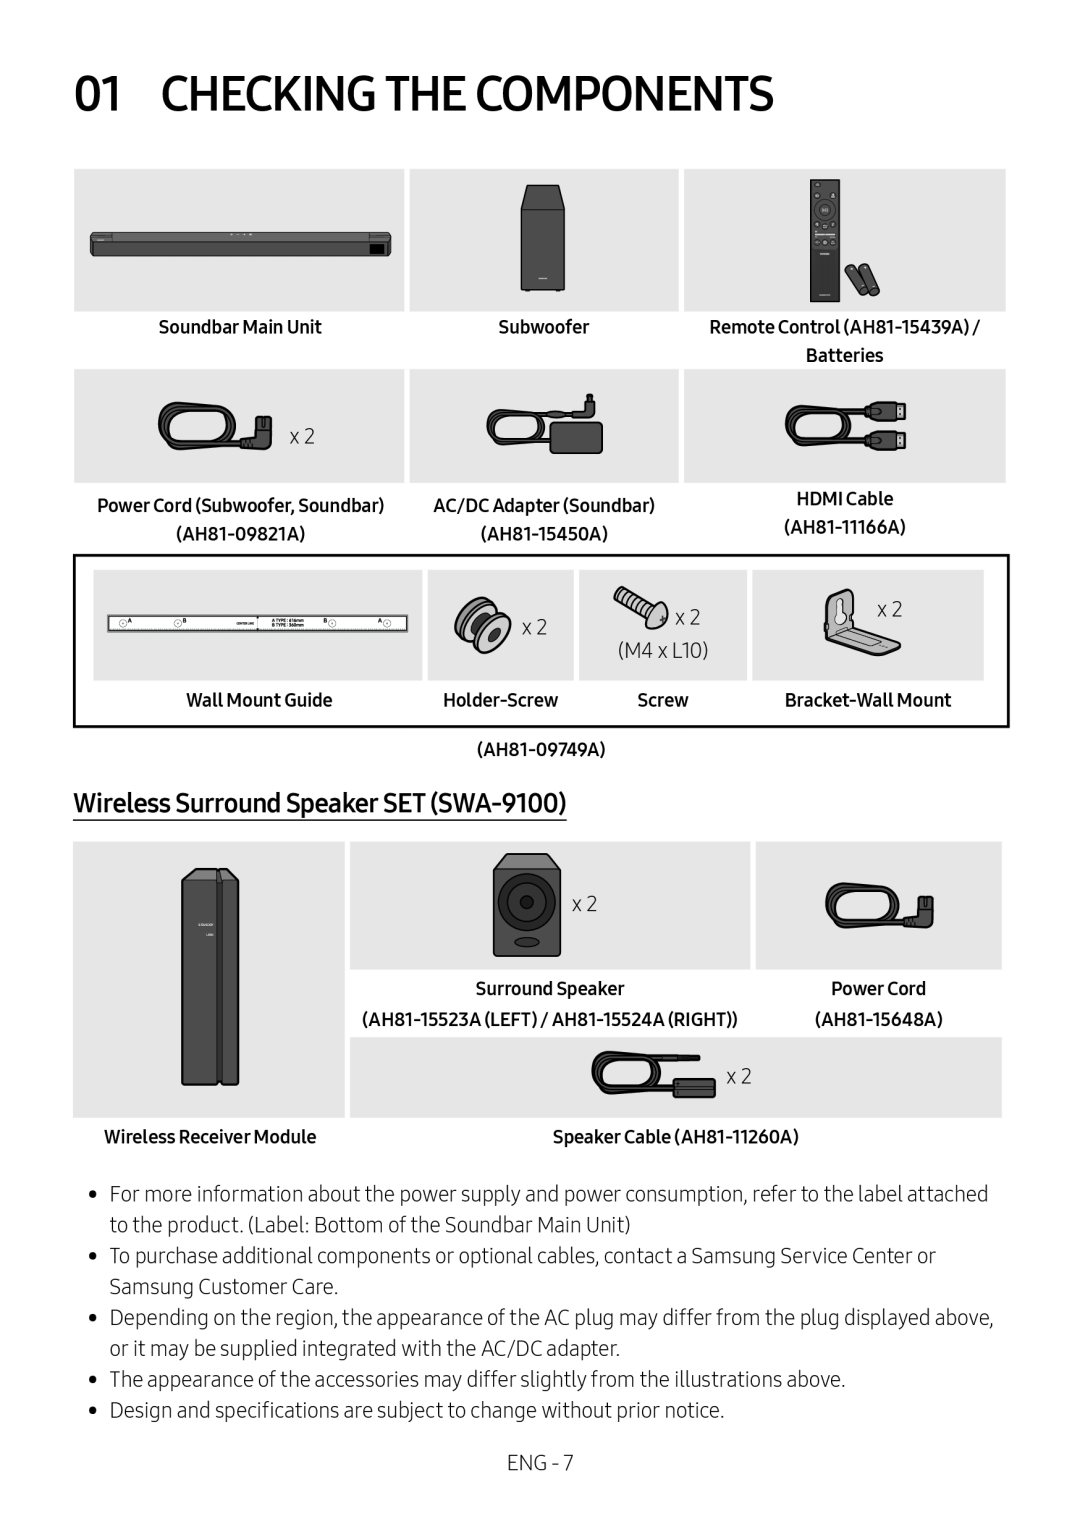 Wireless Surround Speaker SET (SWA-9100) Standard HW-B67C